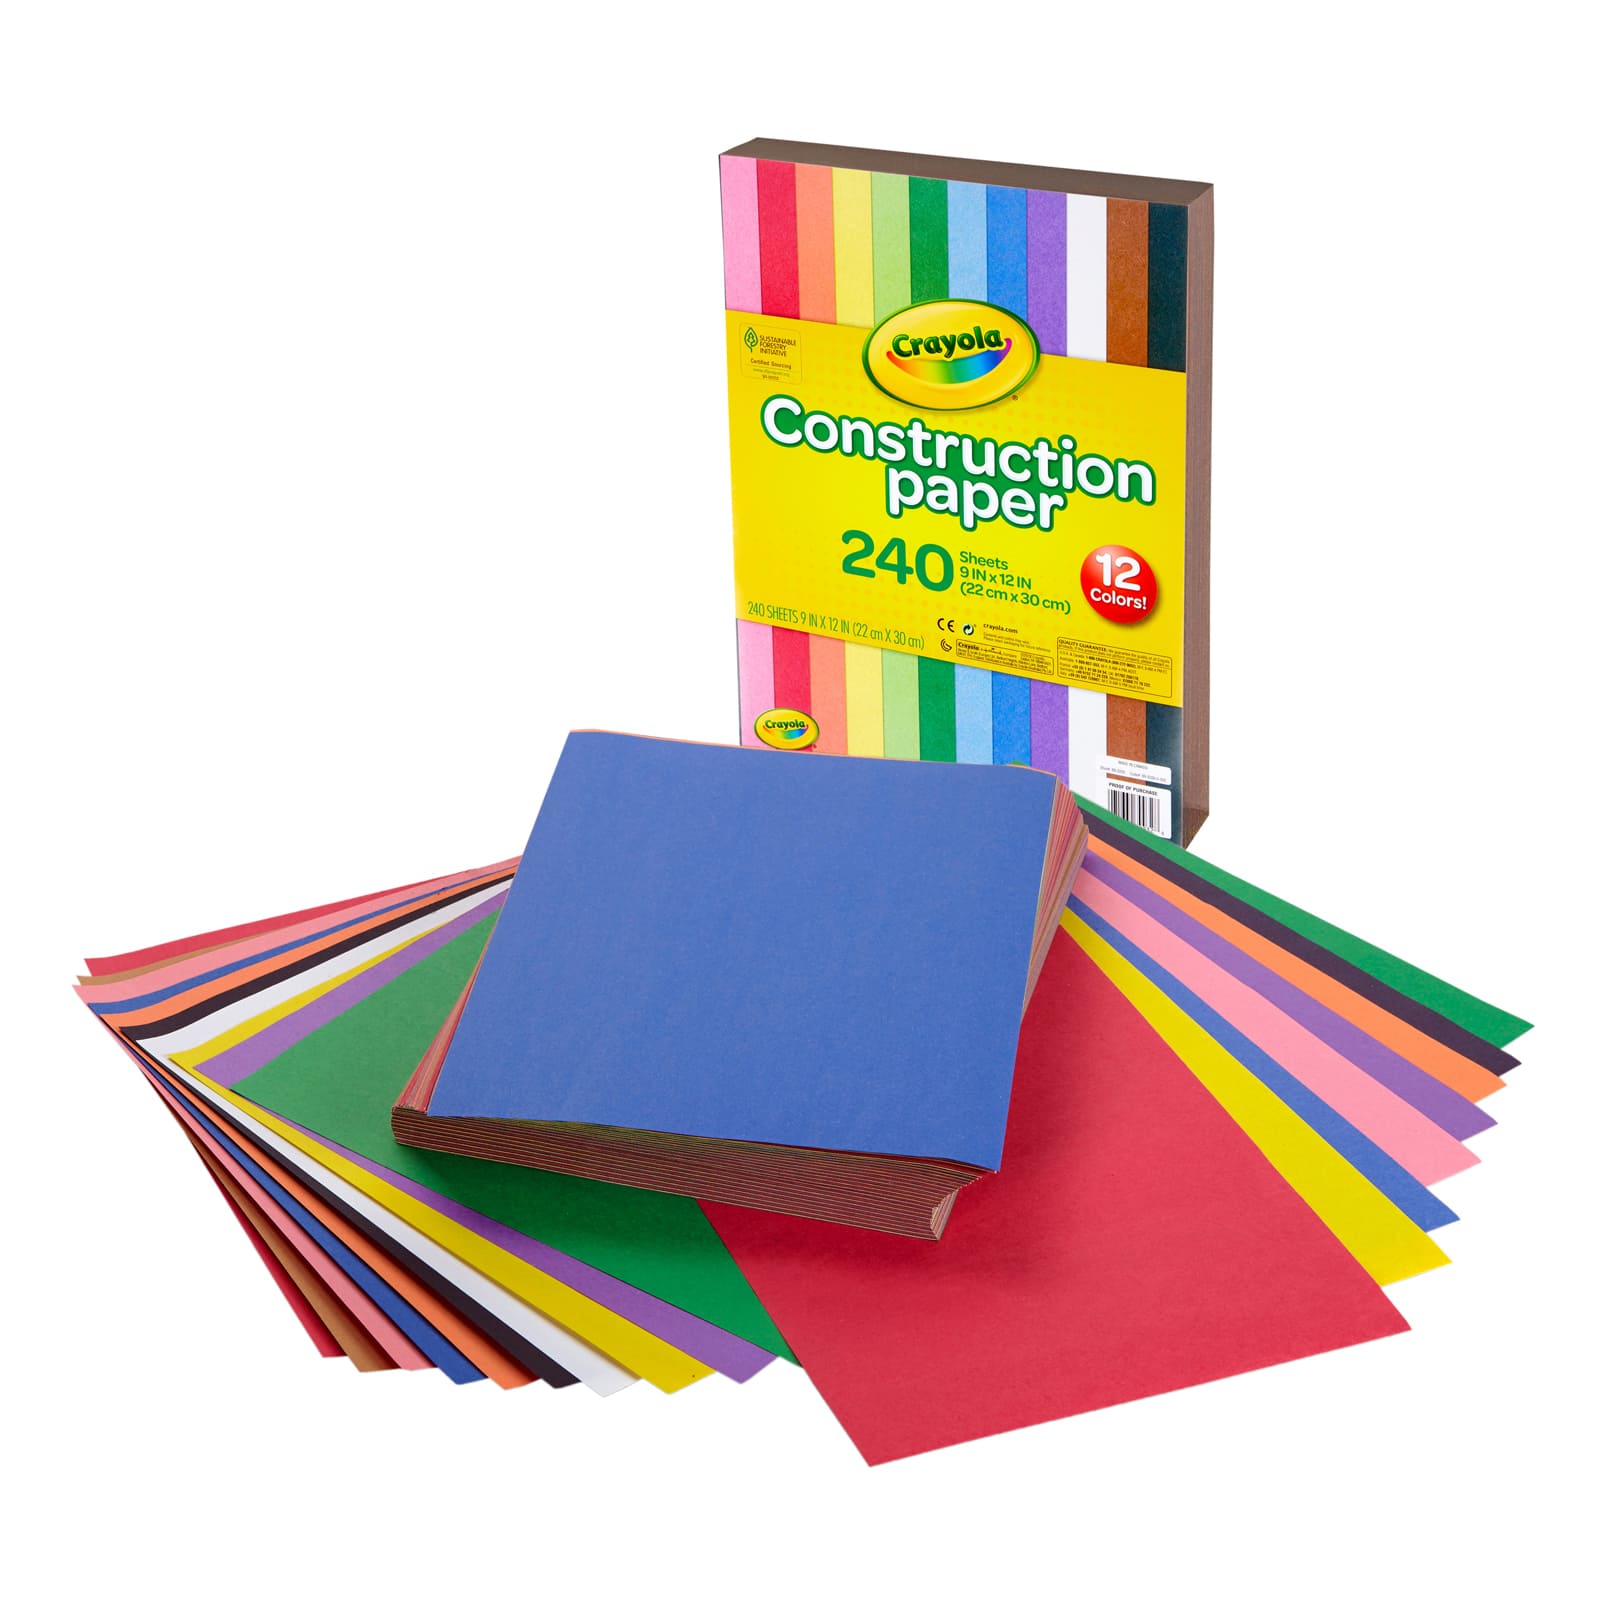 Crayola Construction Paper, 240 Count, Bulk School Supplies For Kids,  2-Pack School Paper